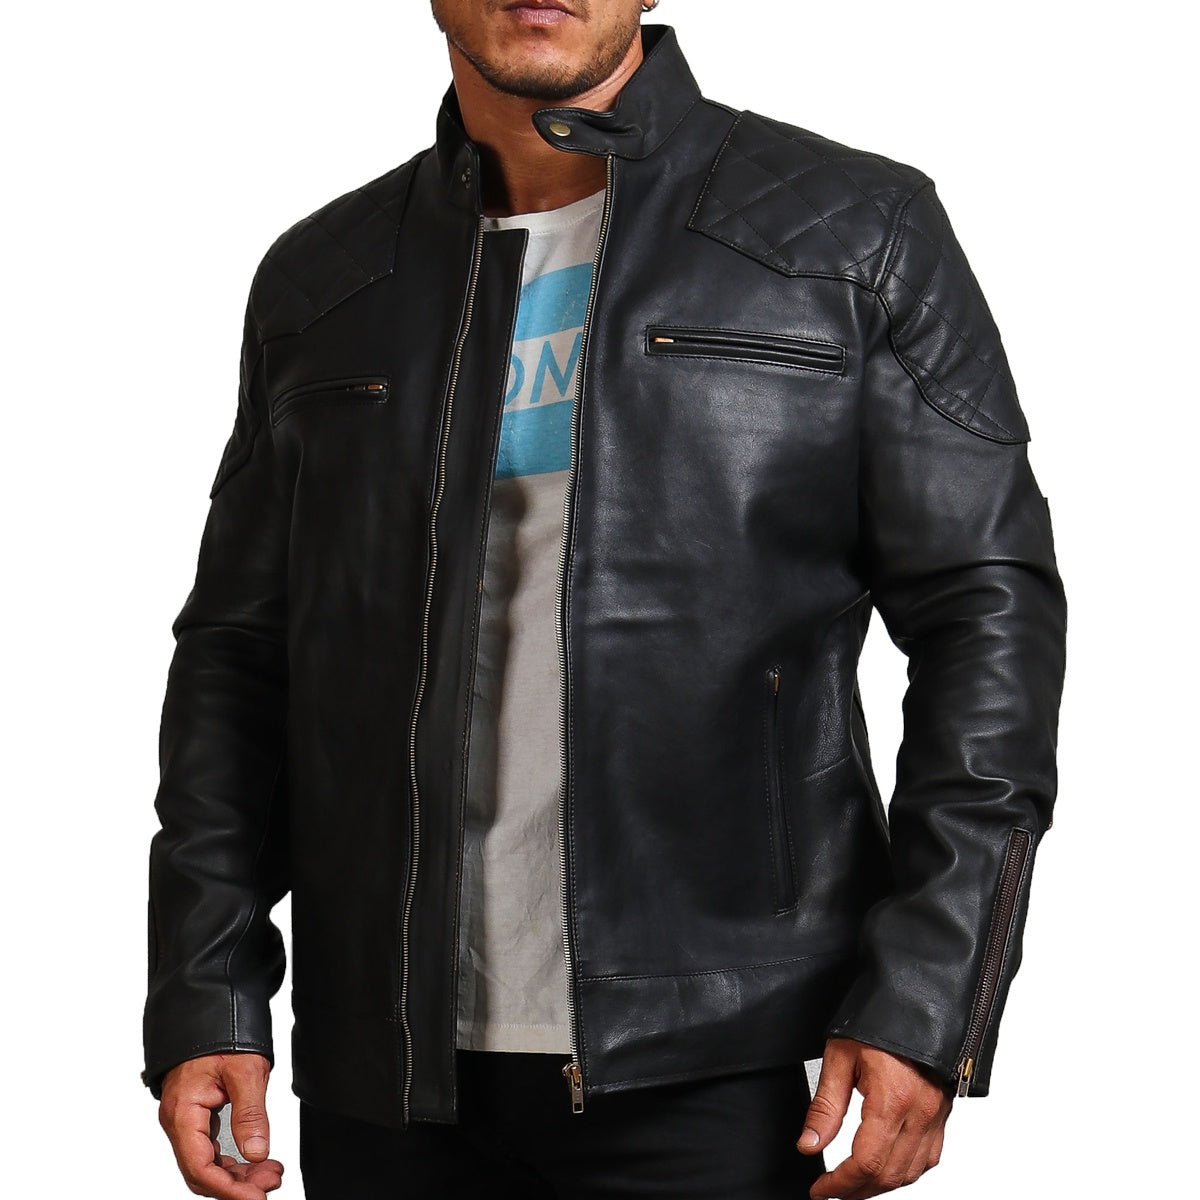 Men's Black Real Leather Motorcycle Jacket